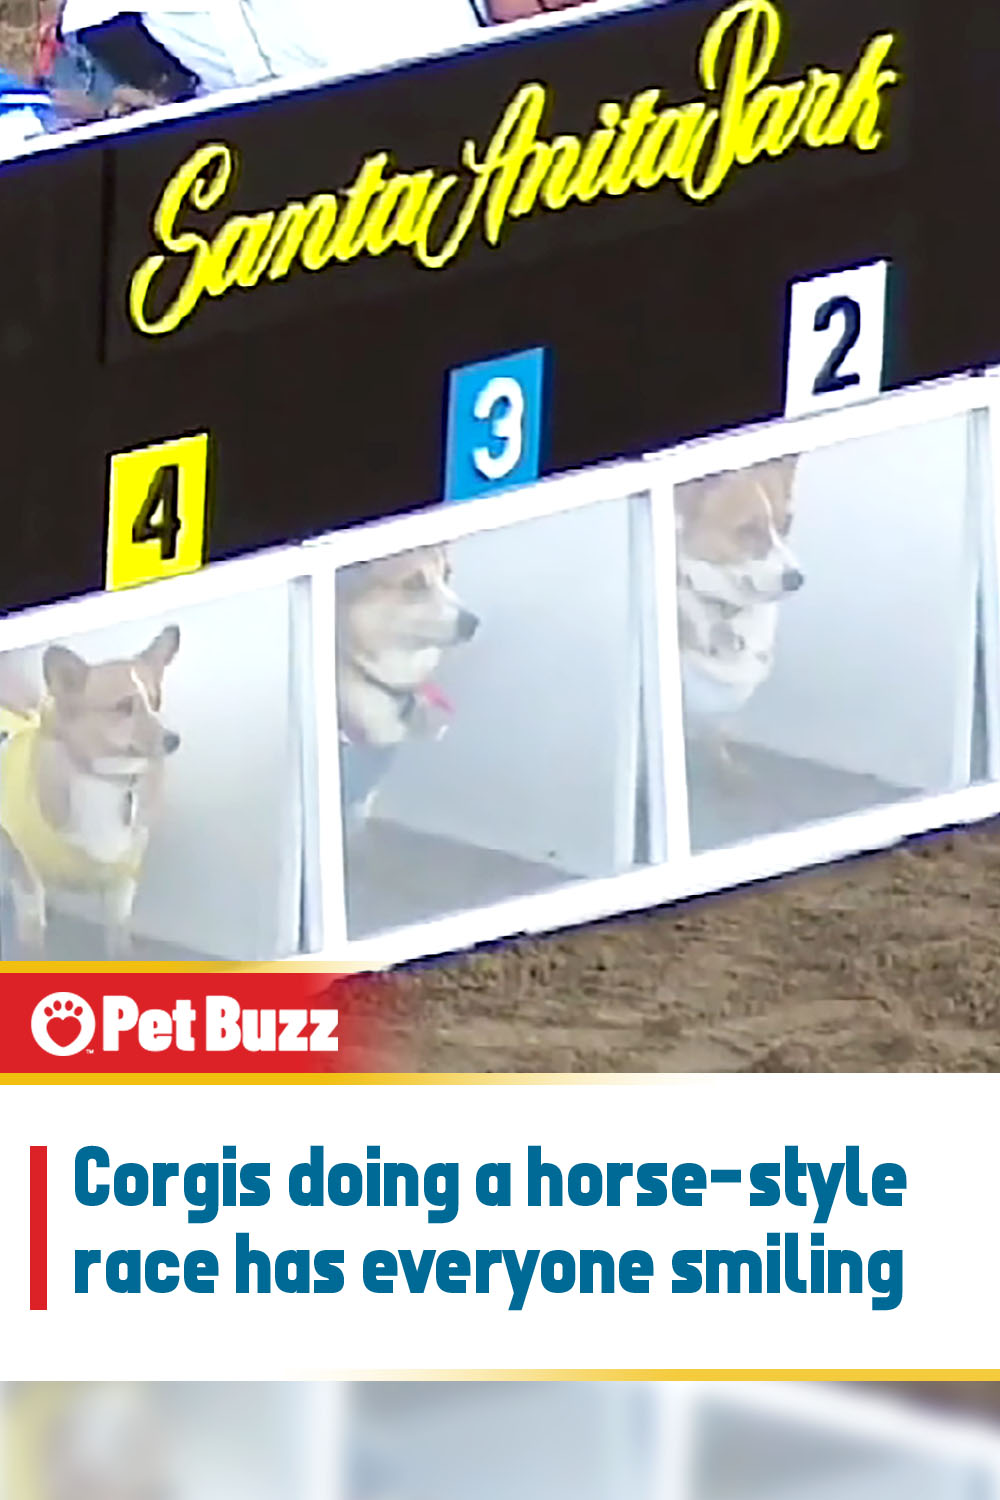 Corgis doing a horse-style race has everyone smiling